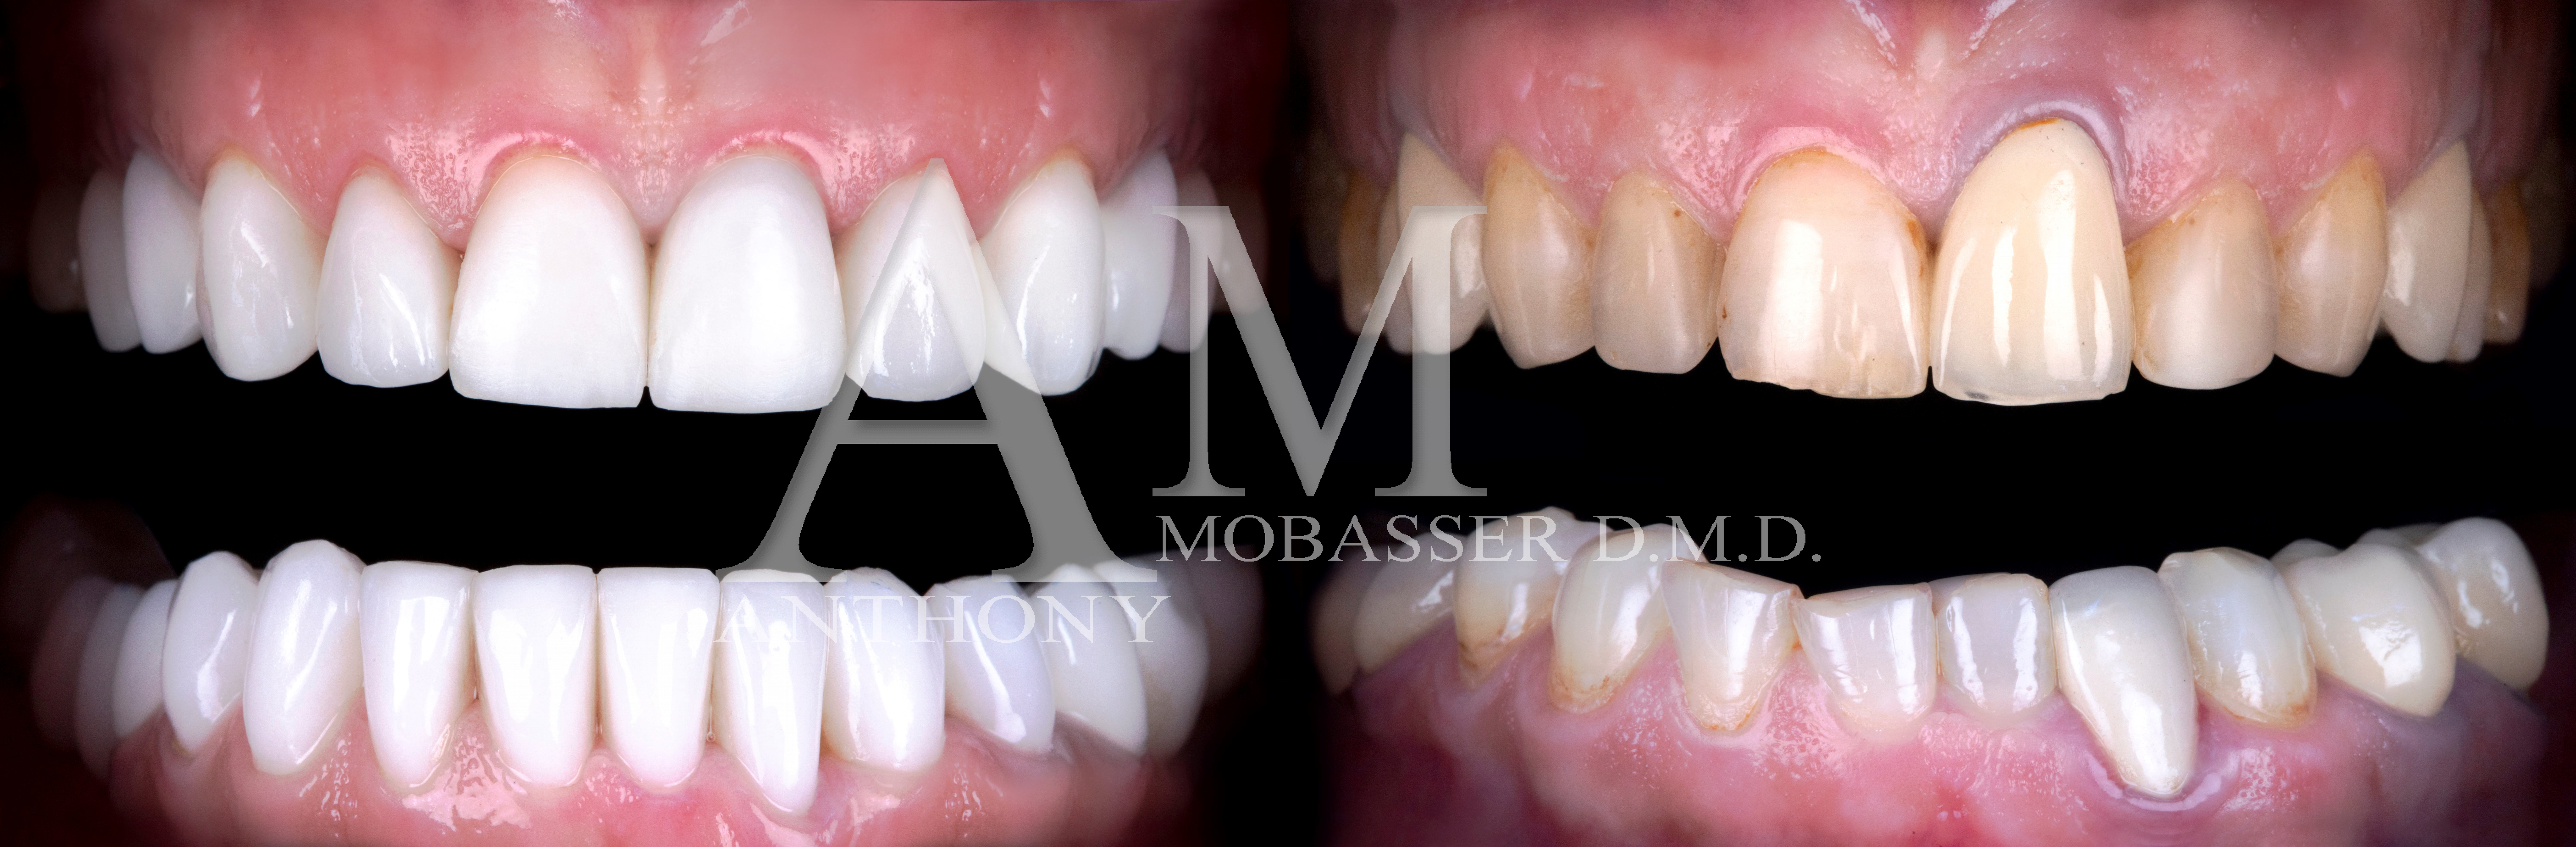 Dental Bonding Antes y Después en Los Angeles, CA - Dr. Anthony Mobasser